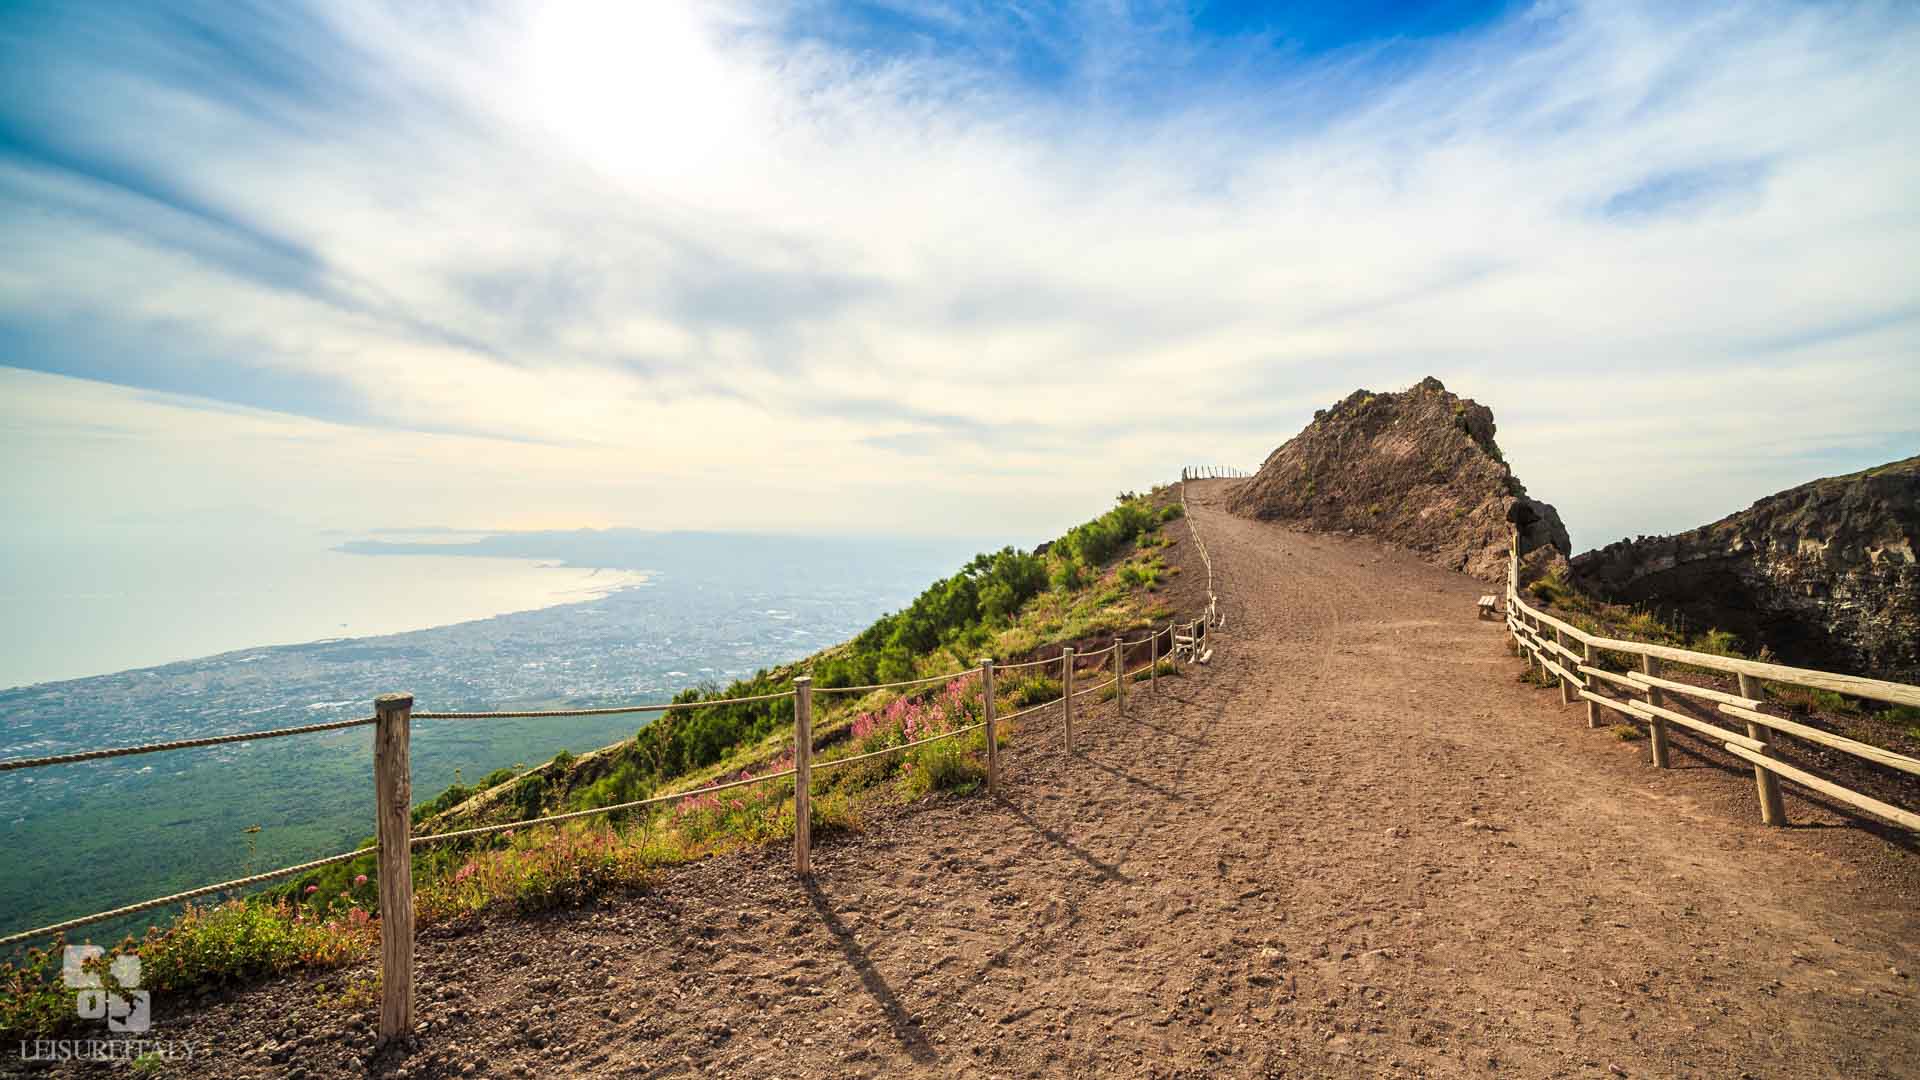 Mount Vesuvius : An unexpected trip up Mount Vesuvius ...